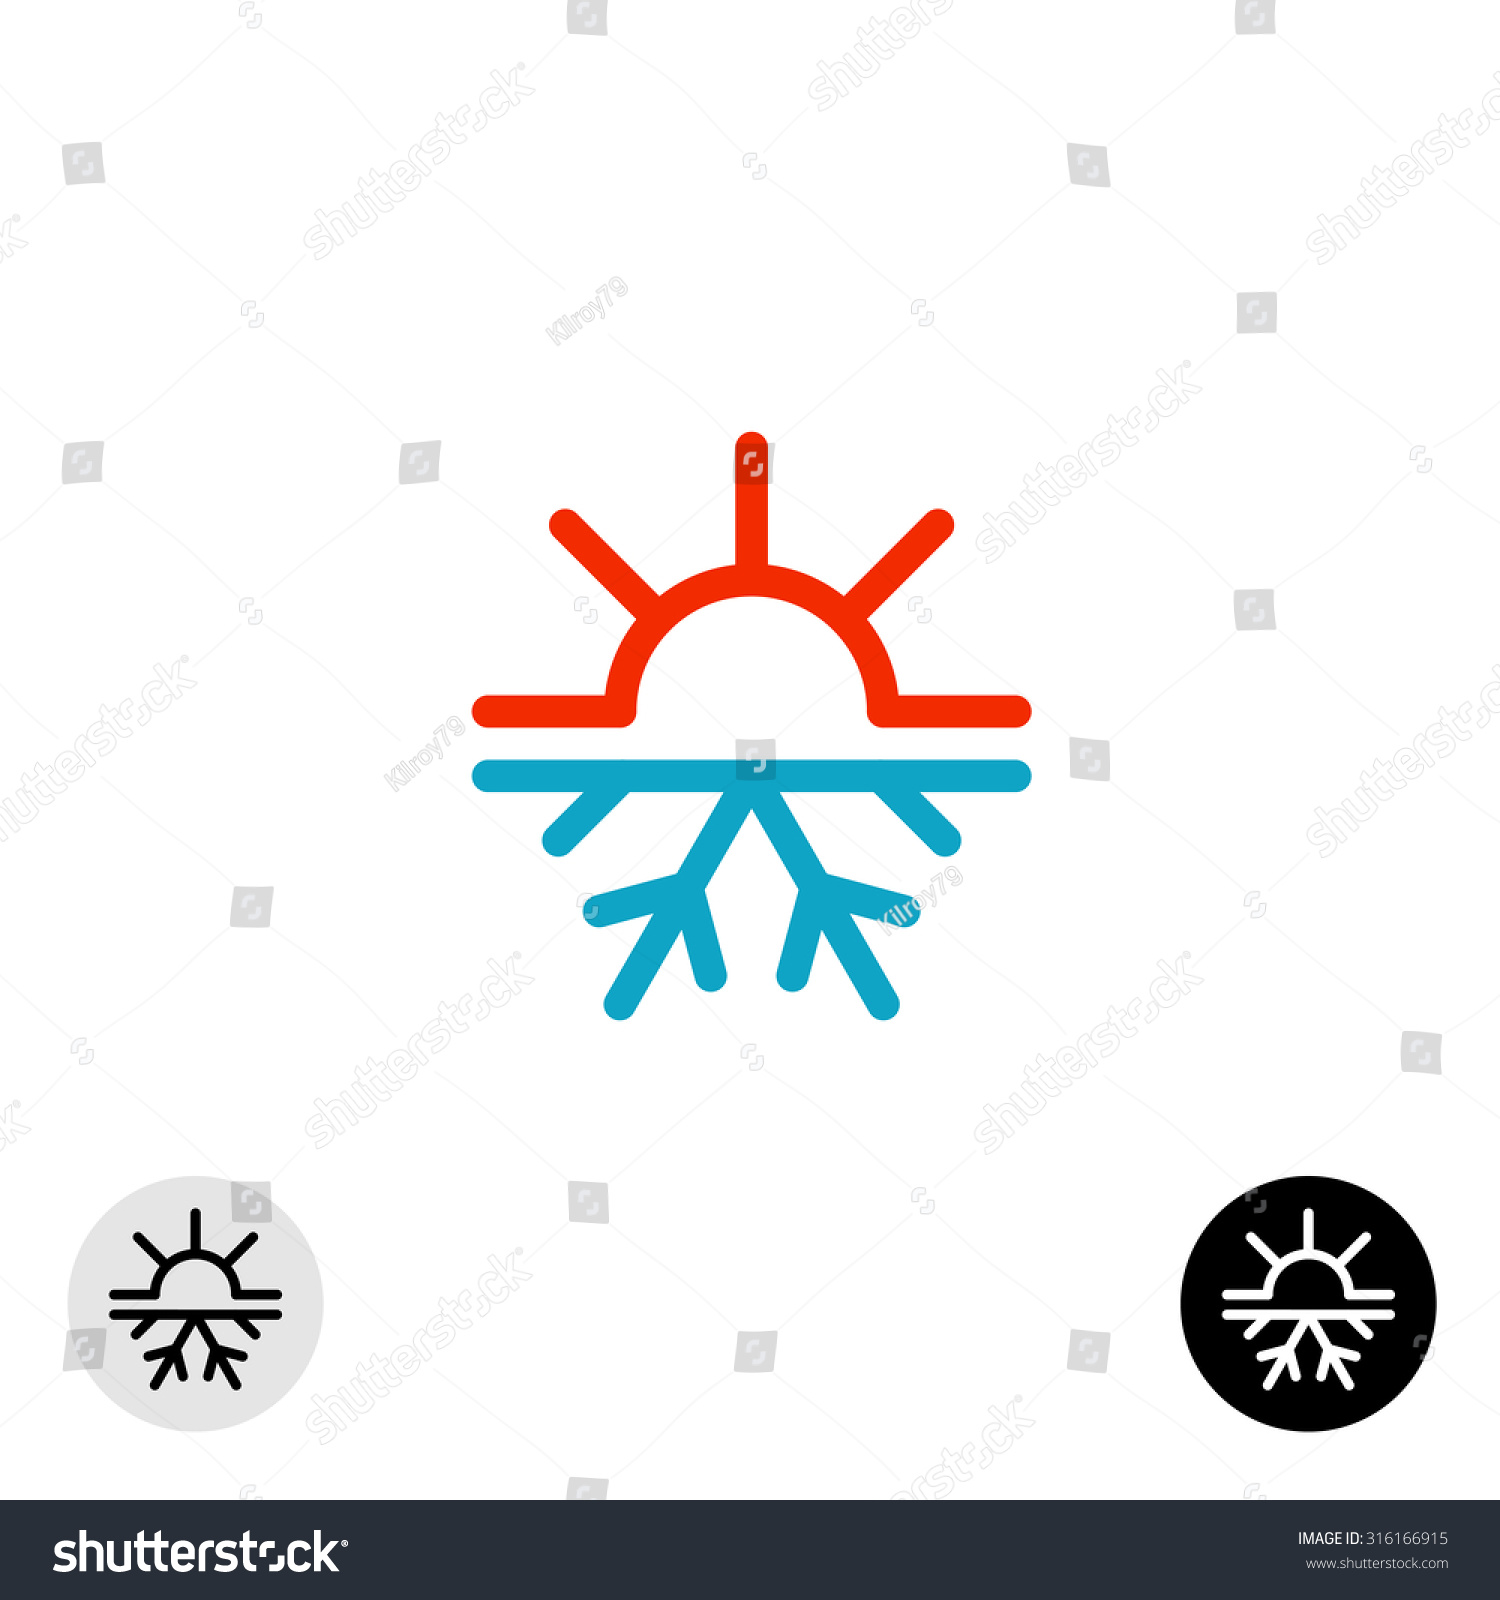 Hot and cold symbol. Sun and snowflake all season concept logo. #316166915